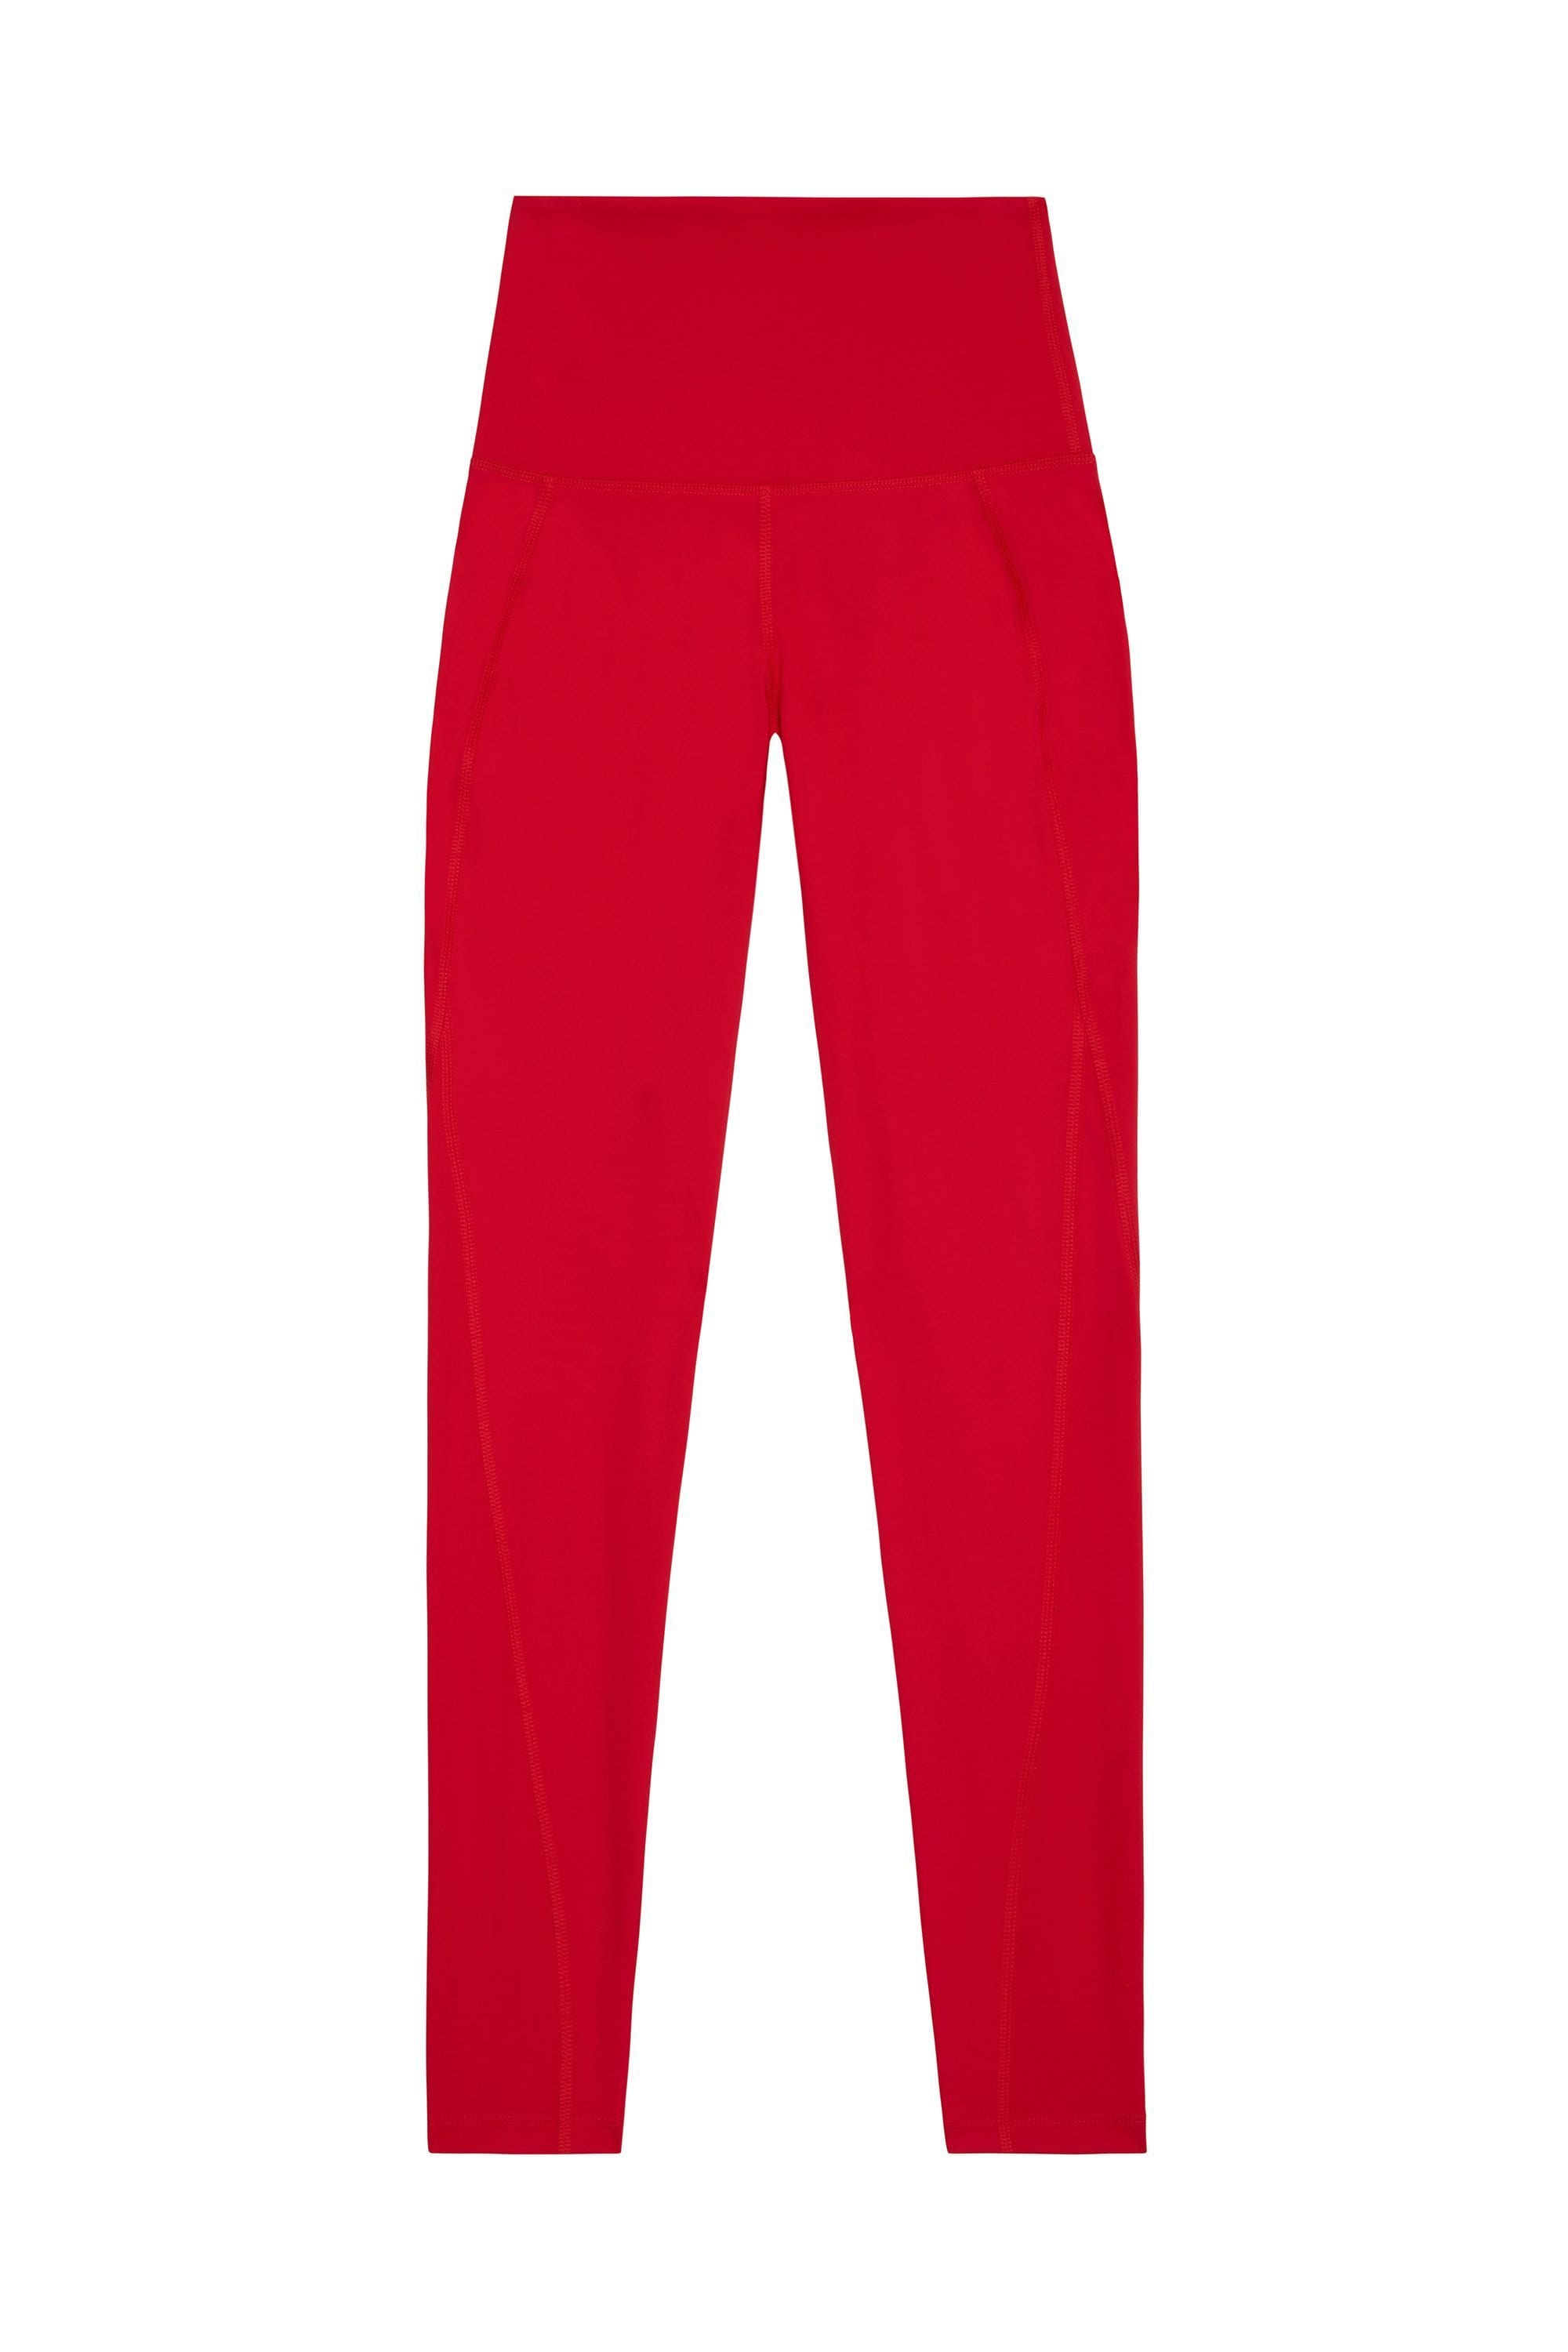 Red eco friendly plus size leggings